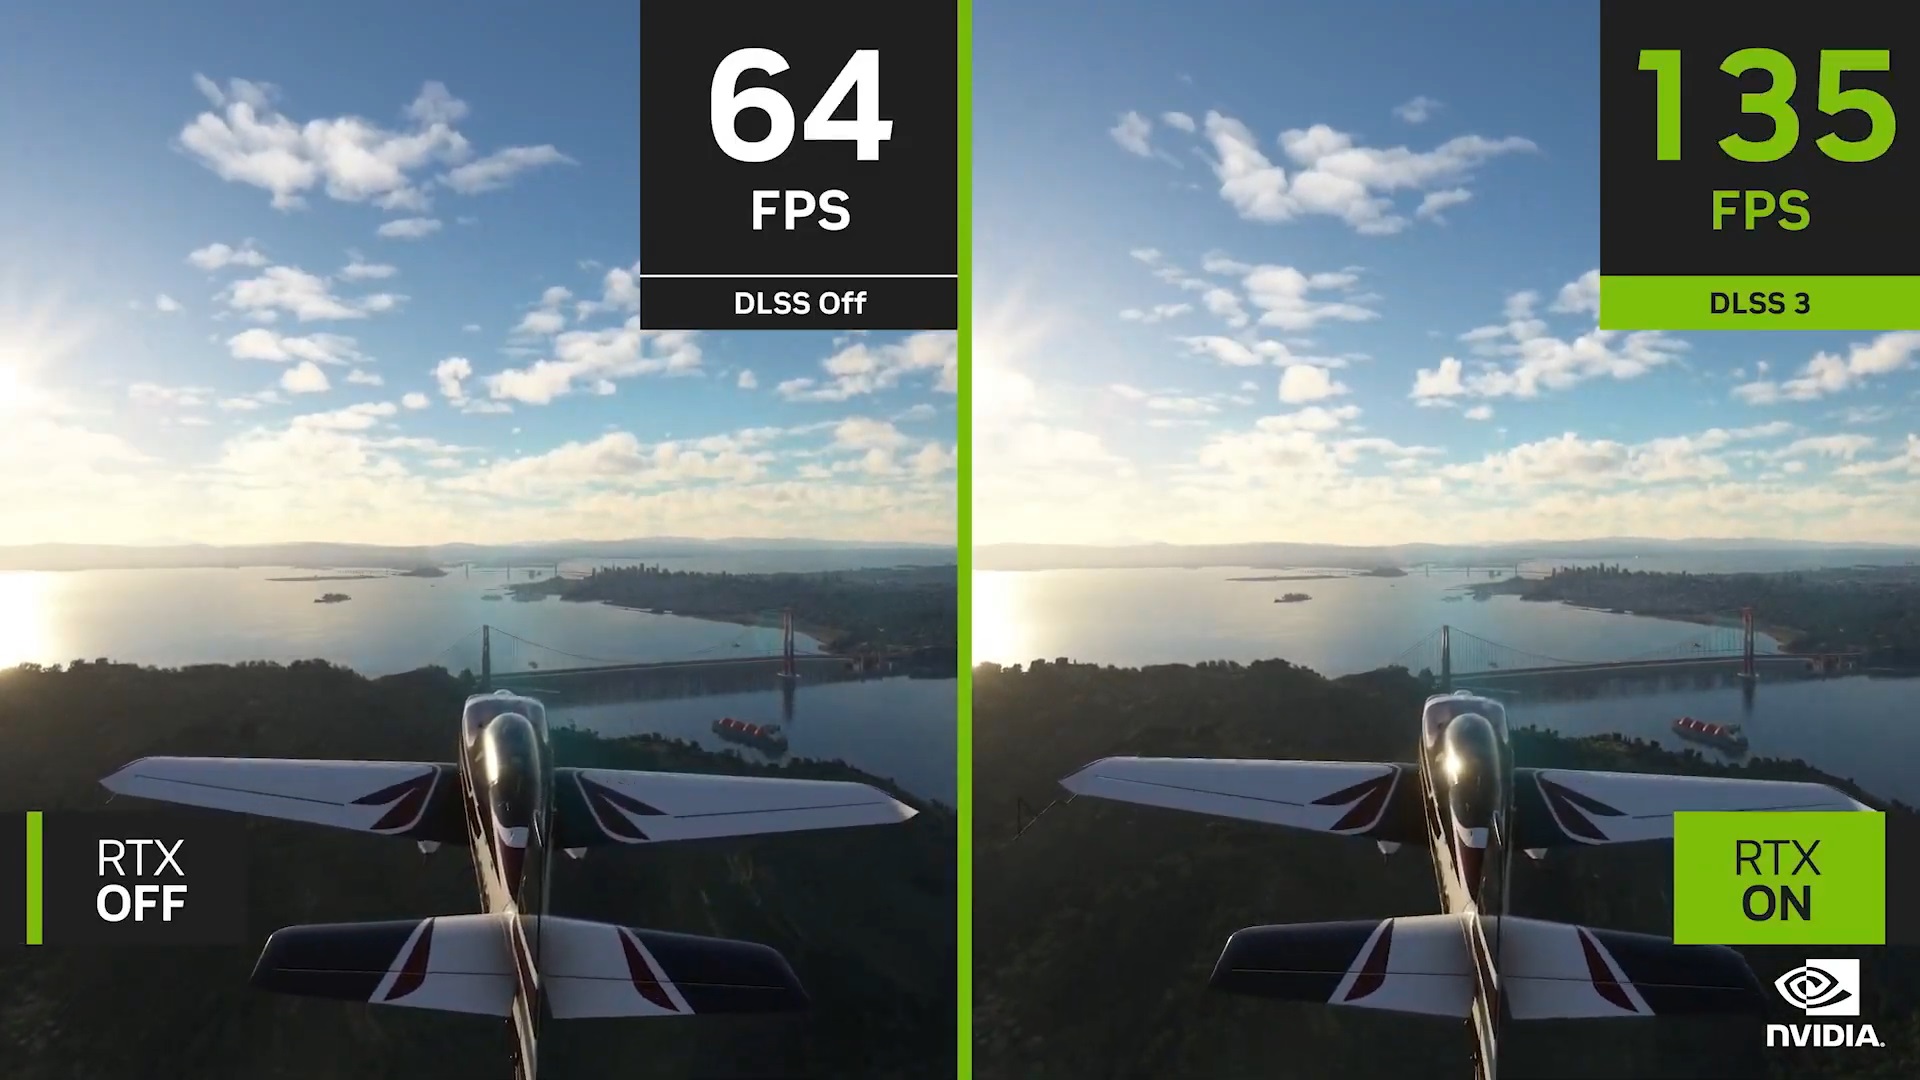 Nvidia DLSS 3 will deliver next-level gaming performance - Techno Blender